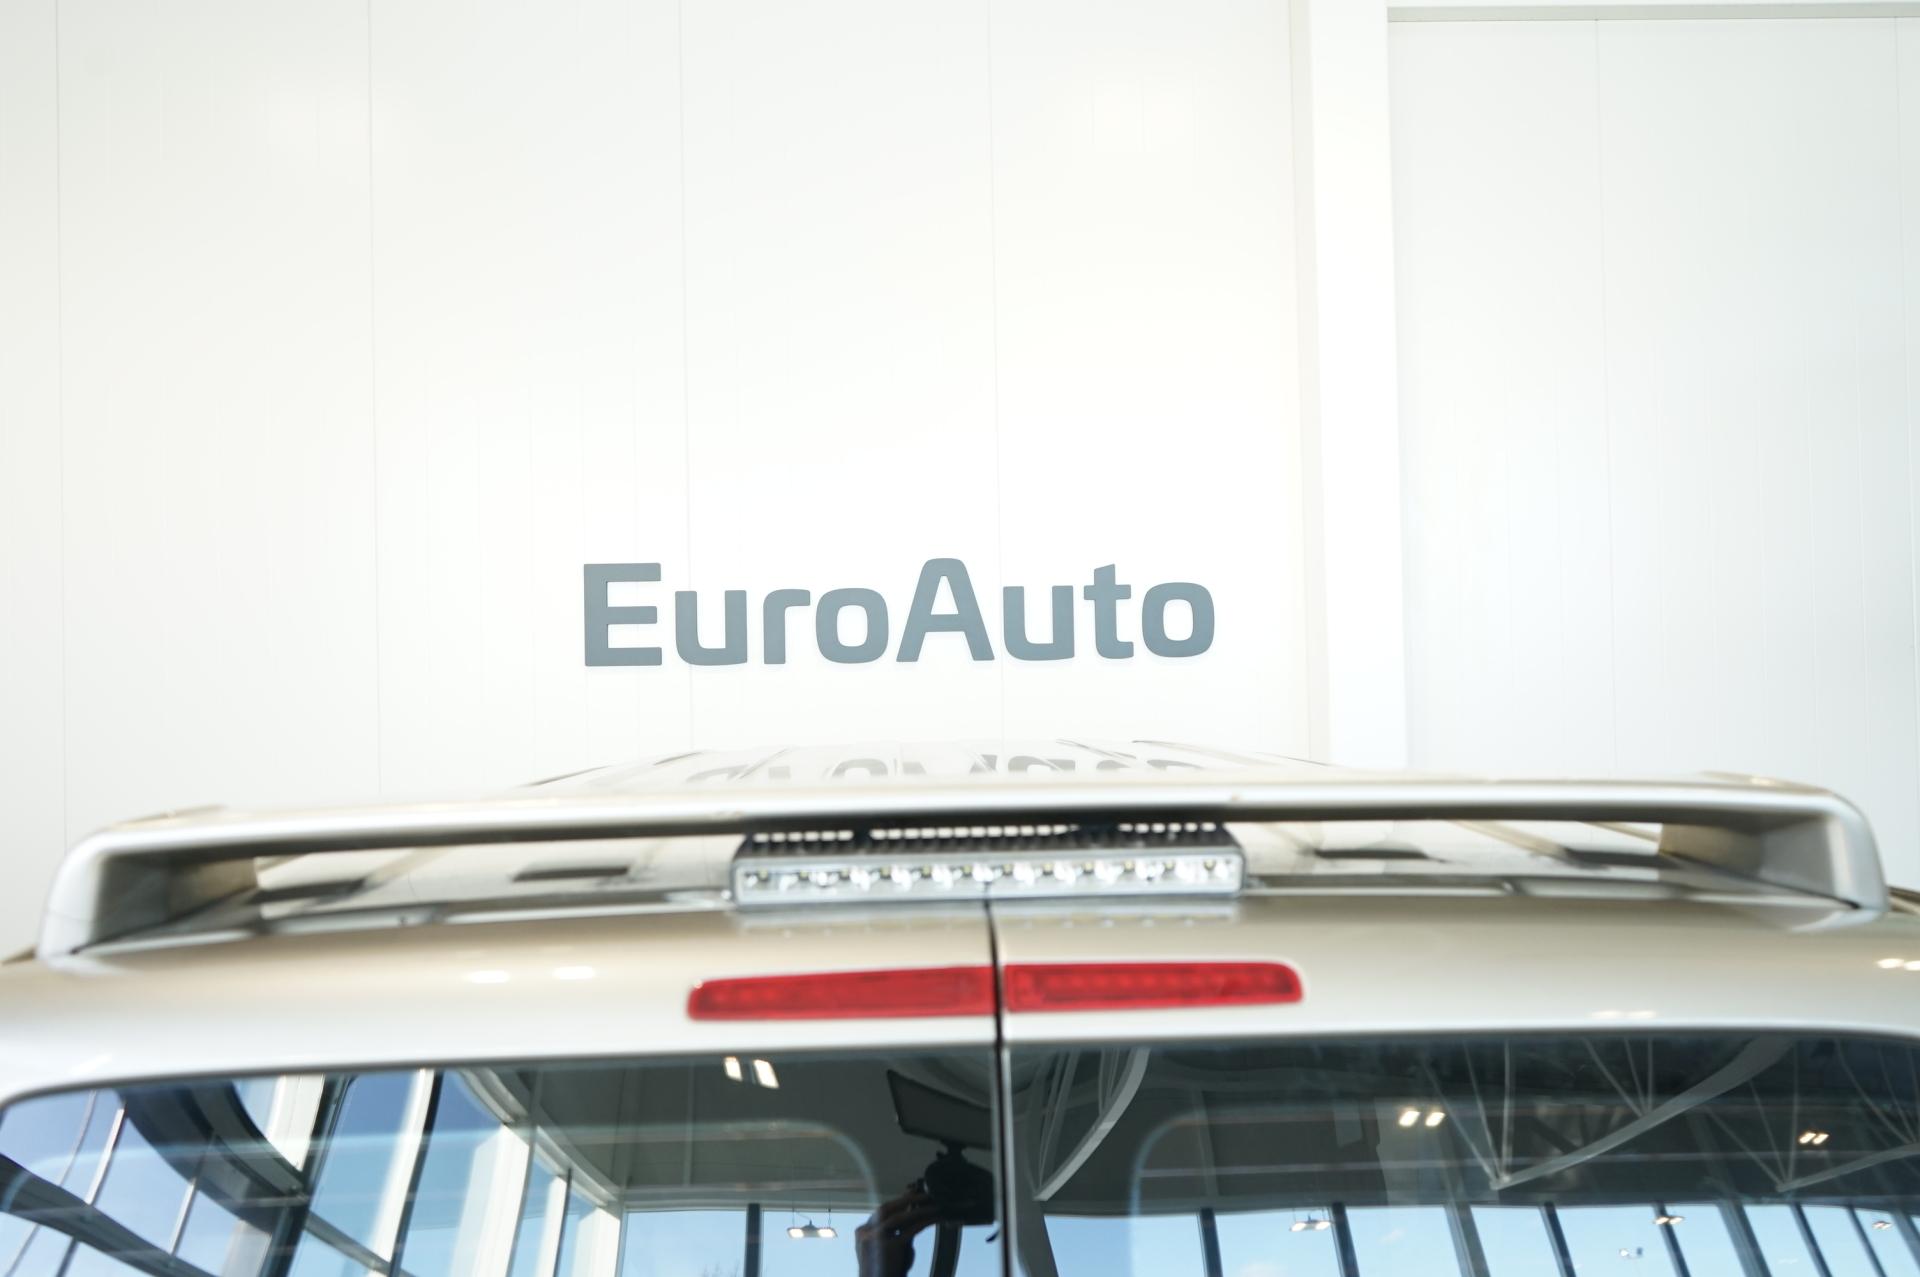 Volkswagen Transporter - EuroAuto